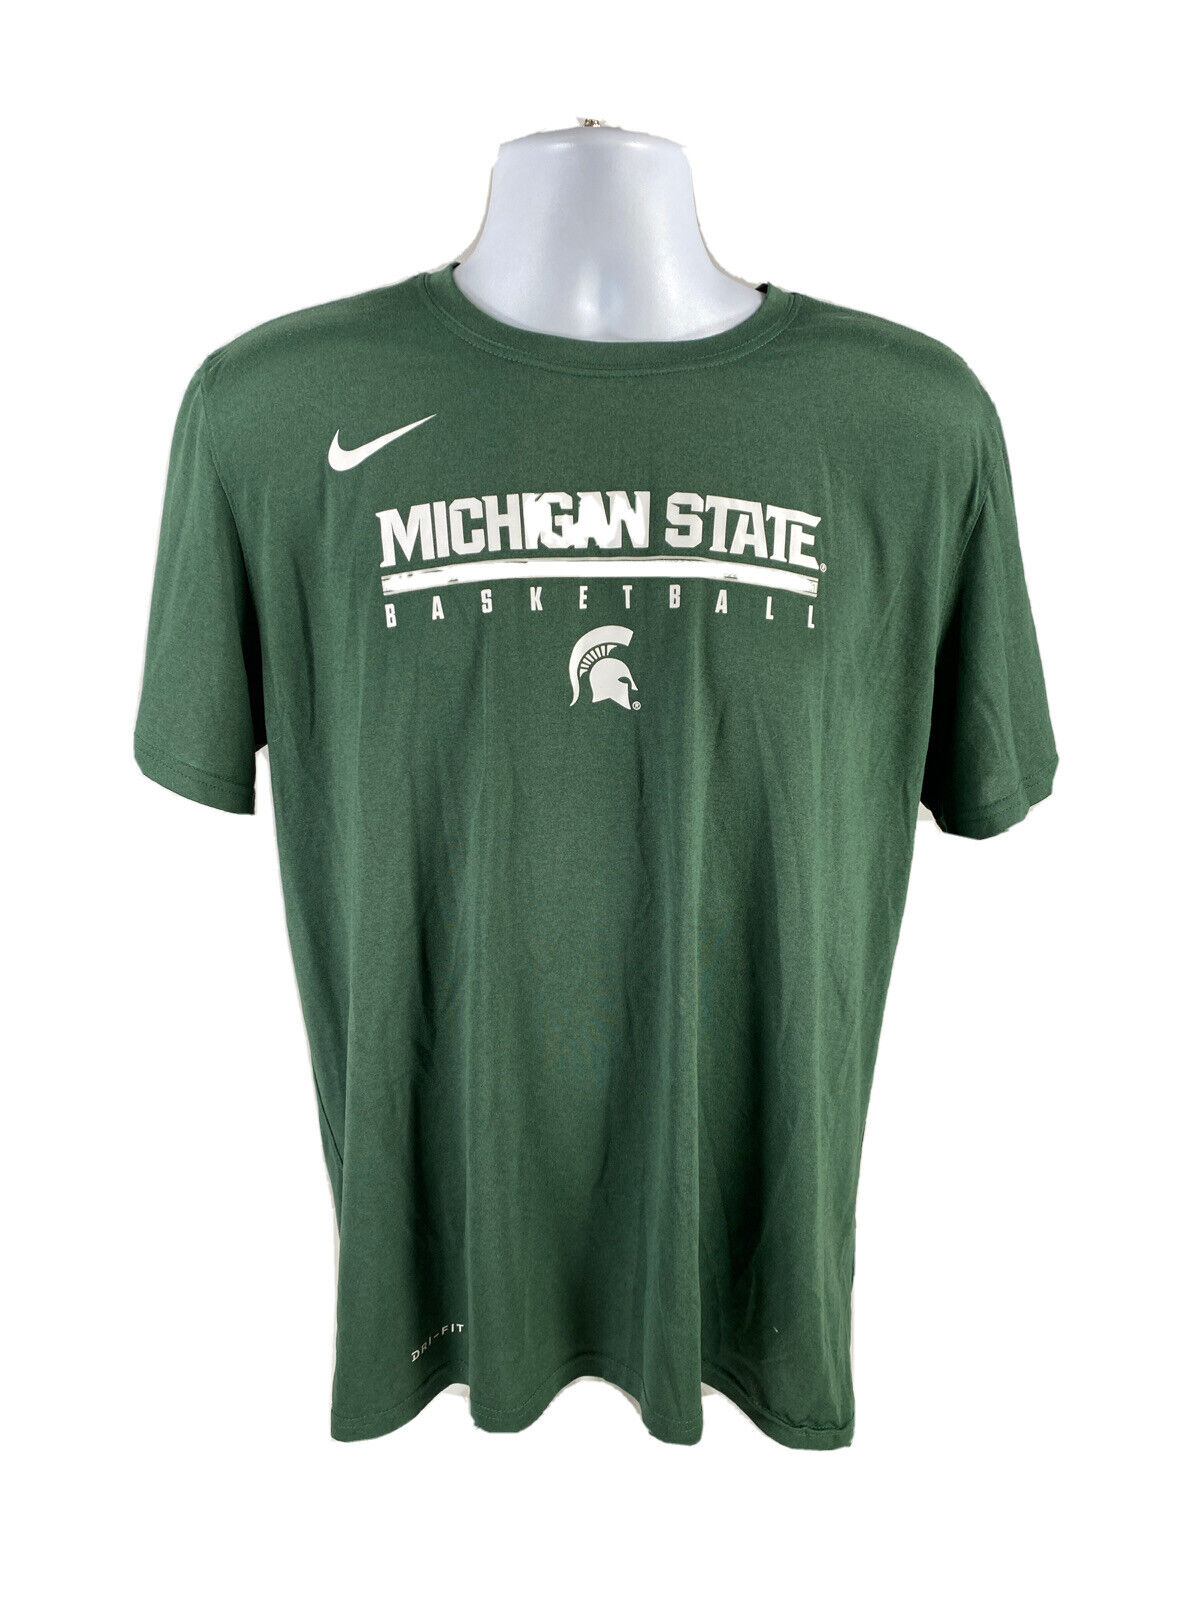 Nike Men's Green Short Sleeve Michigan State MSU Basketball Shirt - L